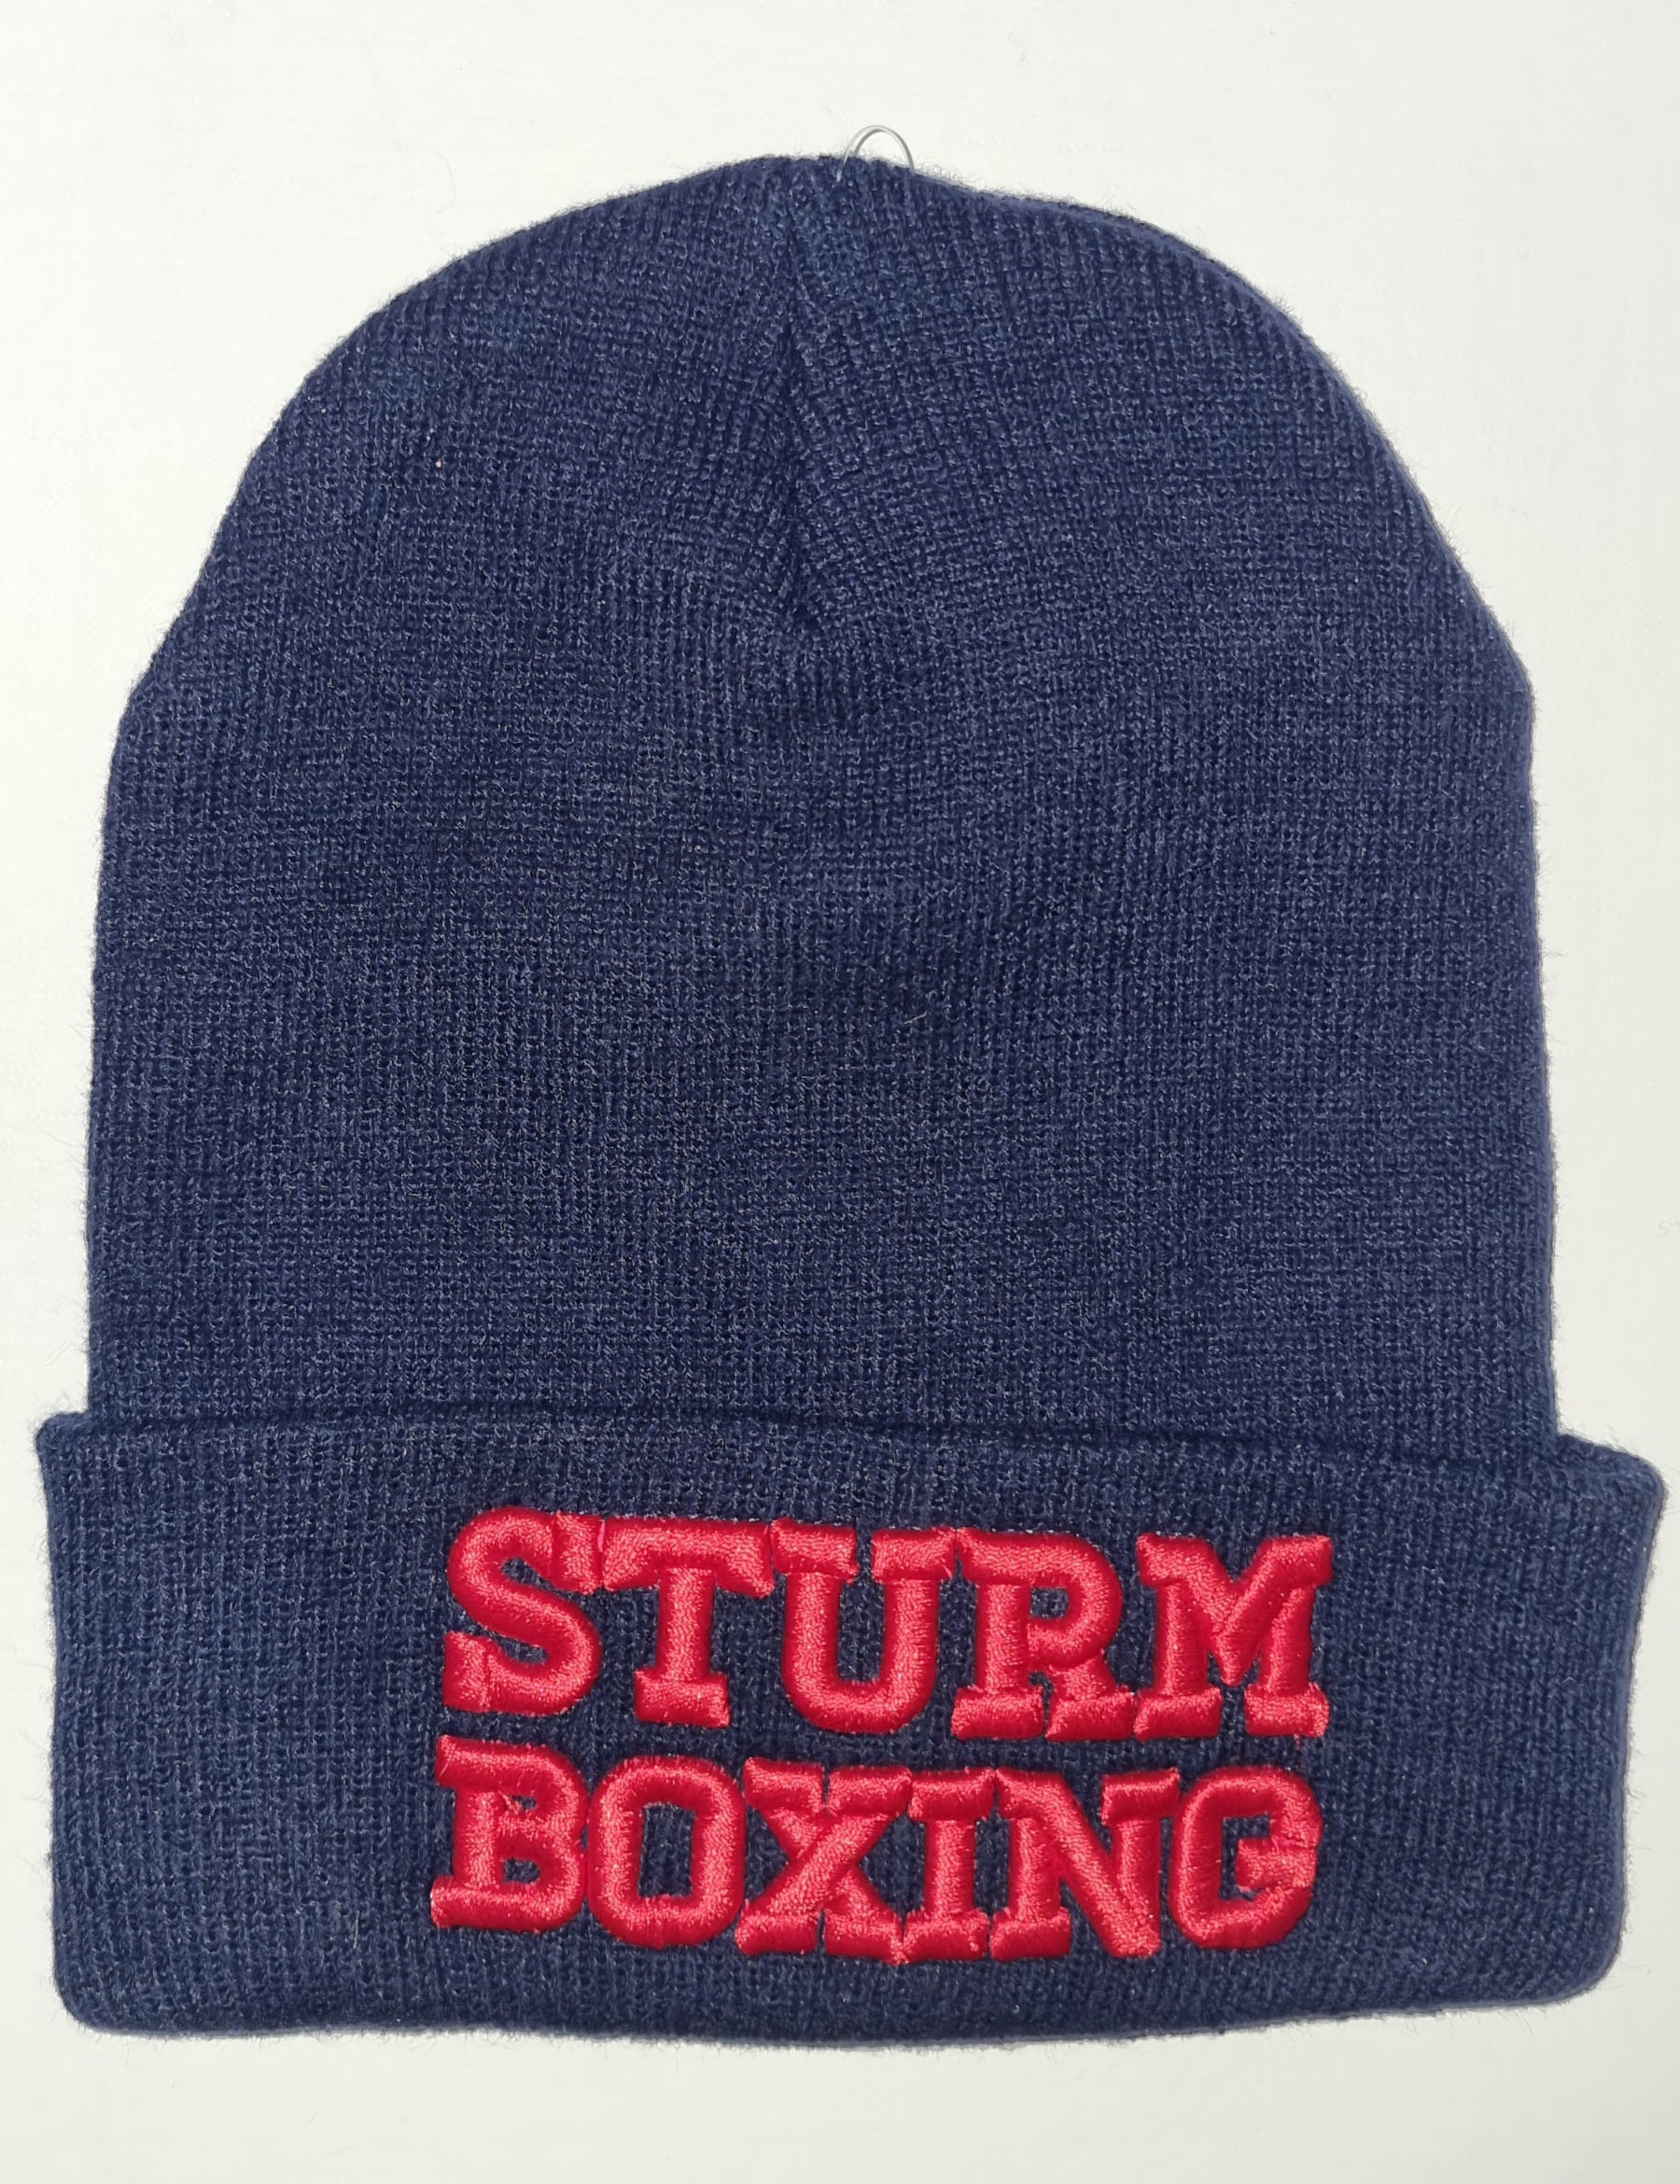 Sturm Boxing Wollmütze